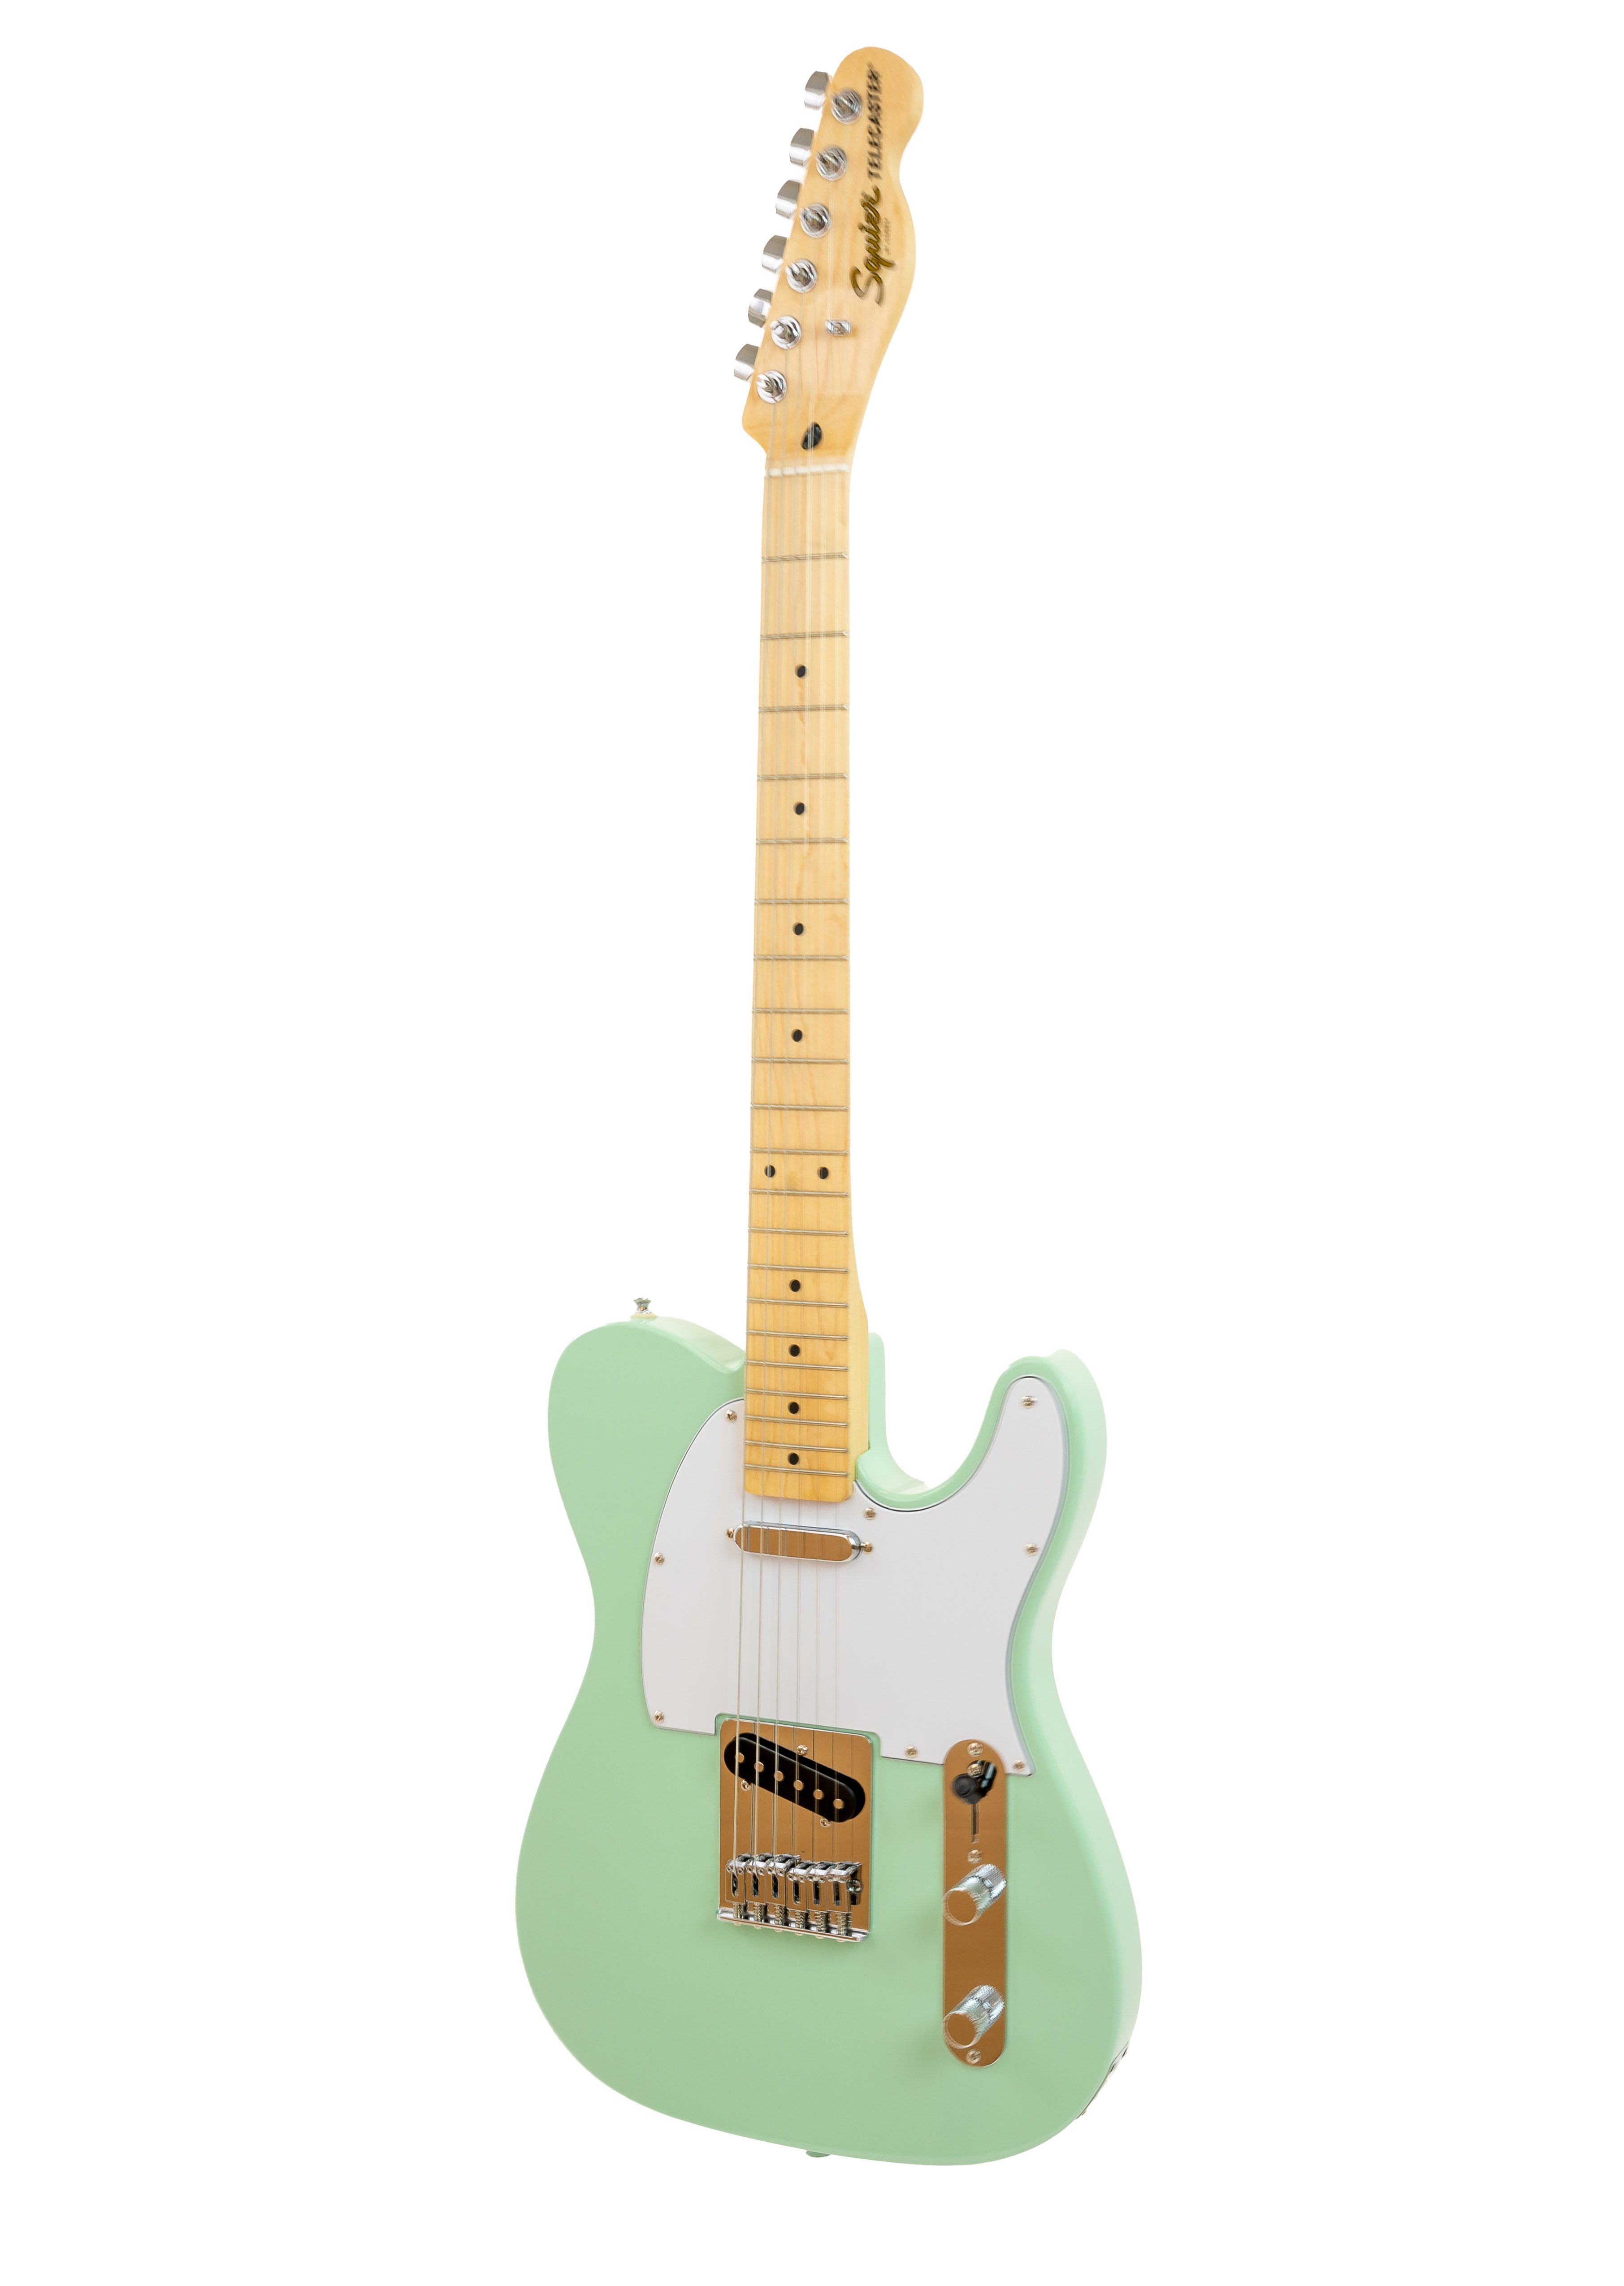 ::Fender Squier Affinity Telecaster - Surf Green